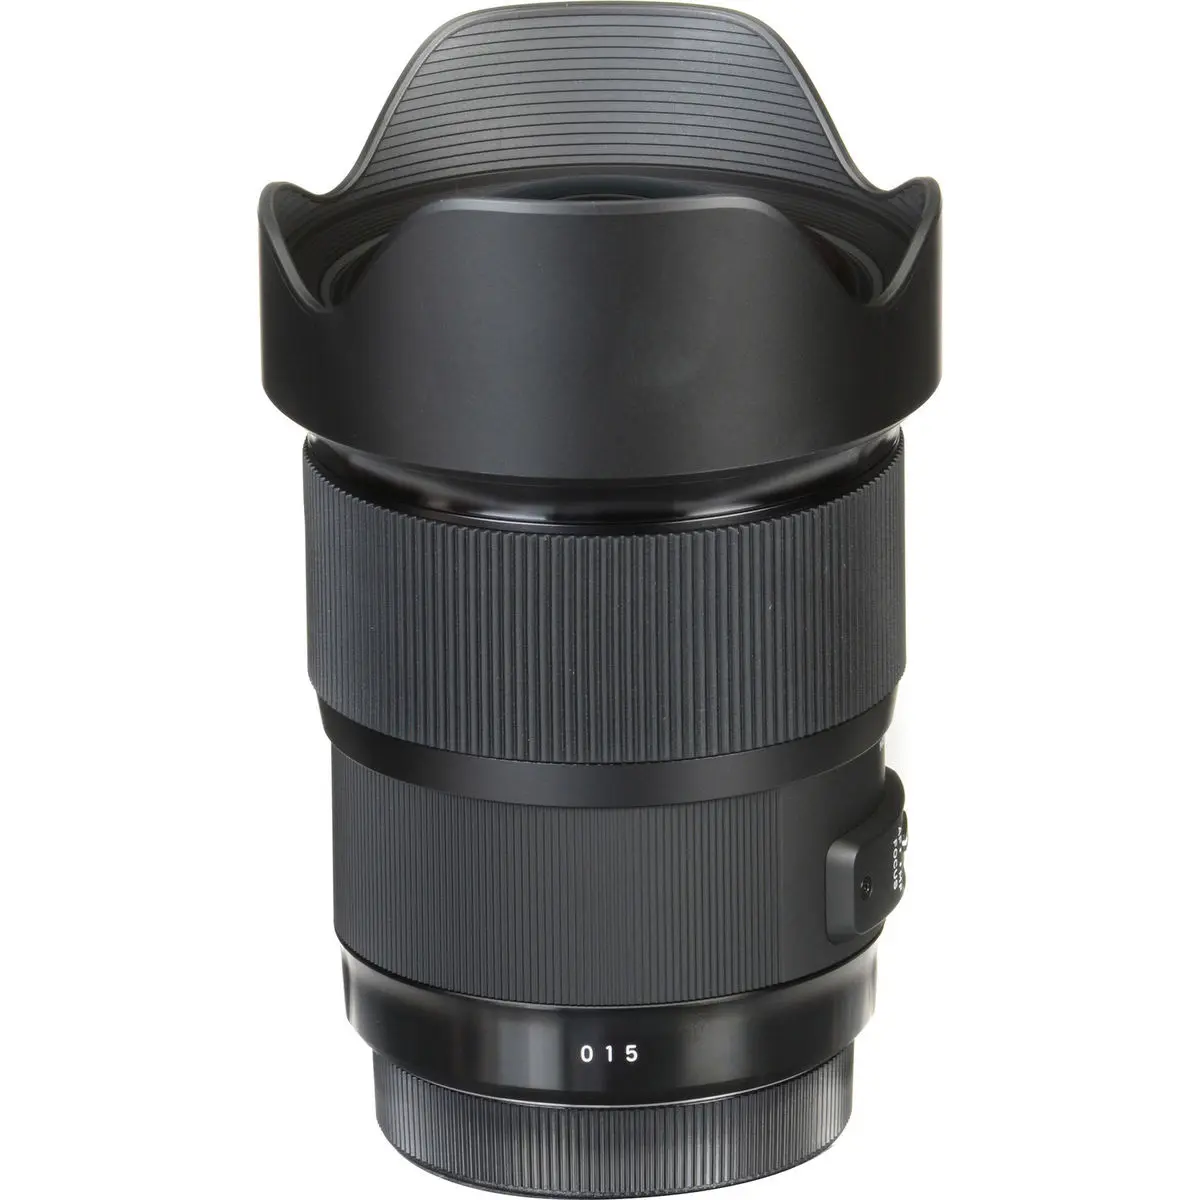 4. Sigma 20mm F1.4 DG HSM | A (Canon) Lens